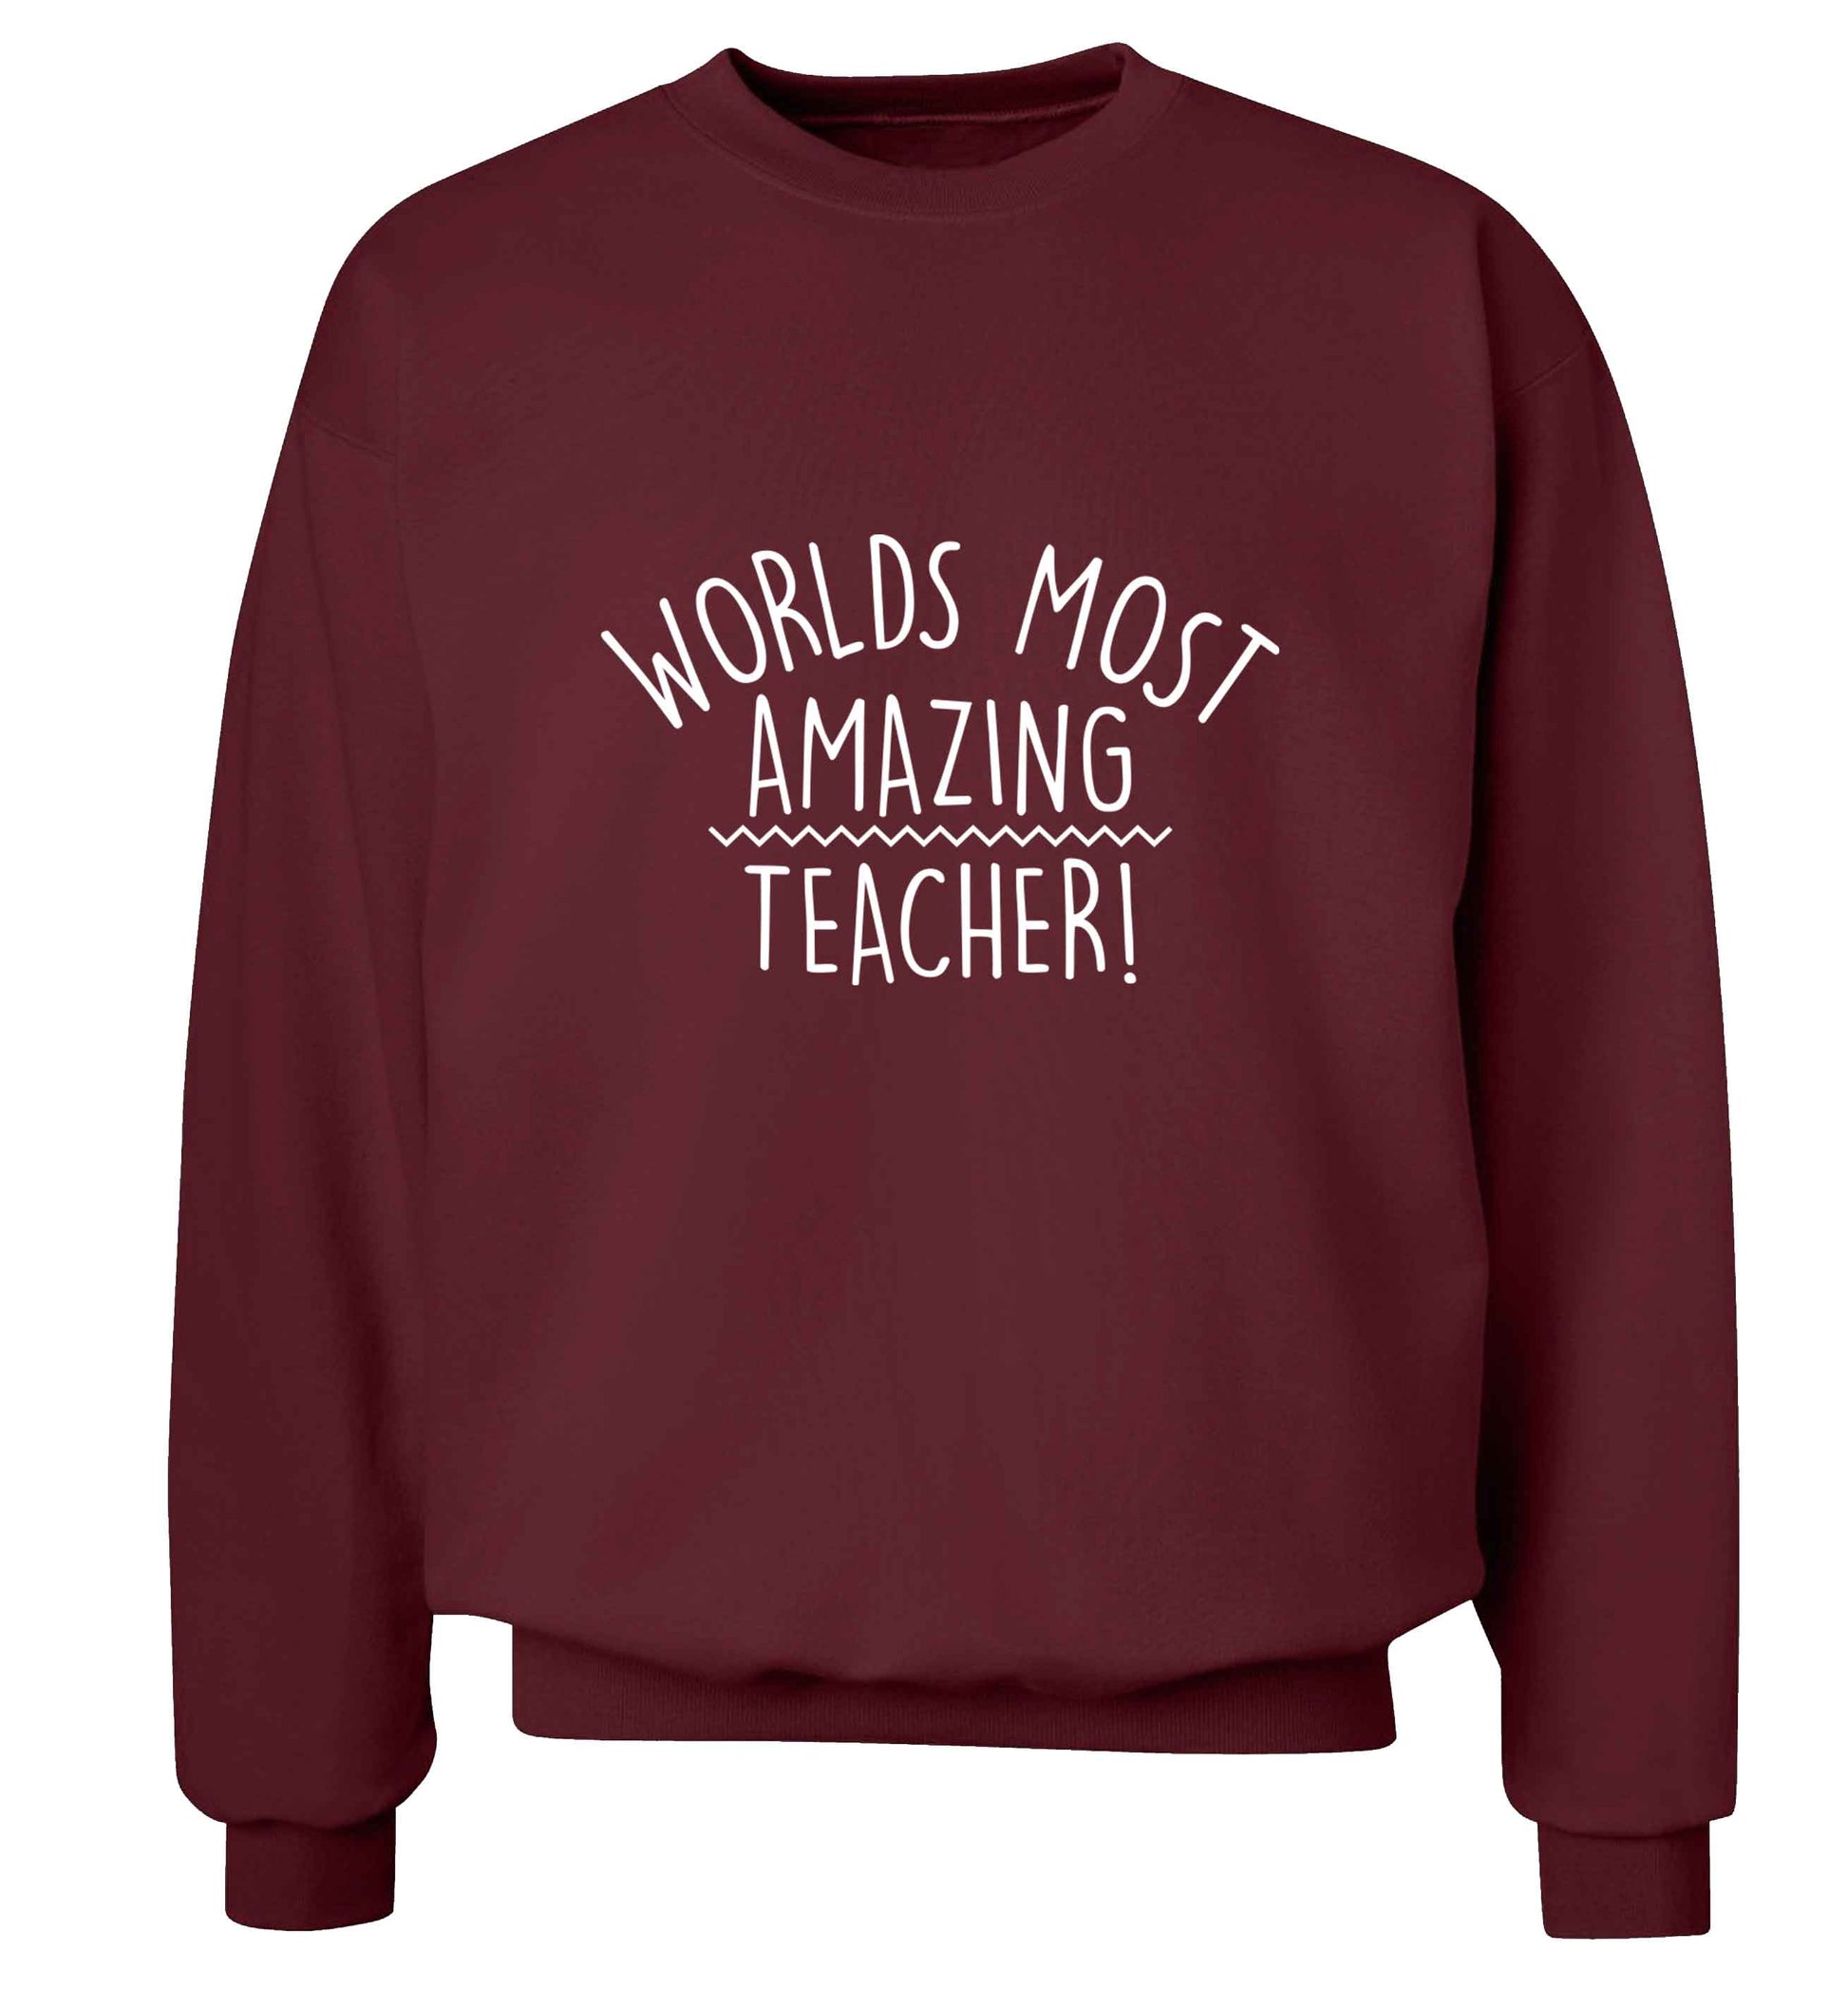 Worlds most amazing teacher adult's unisex maroon sweater 2XL